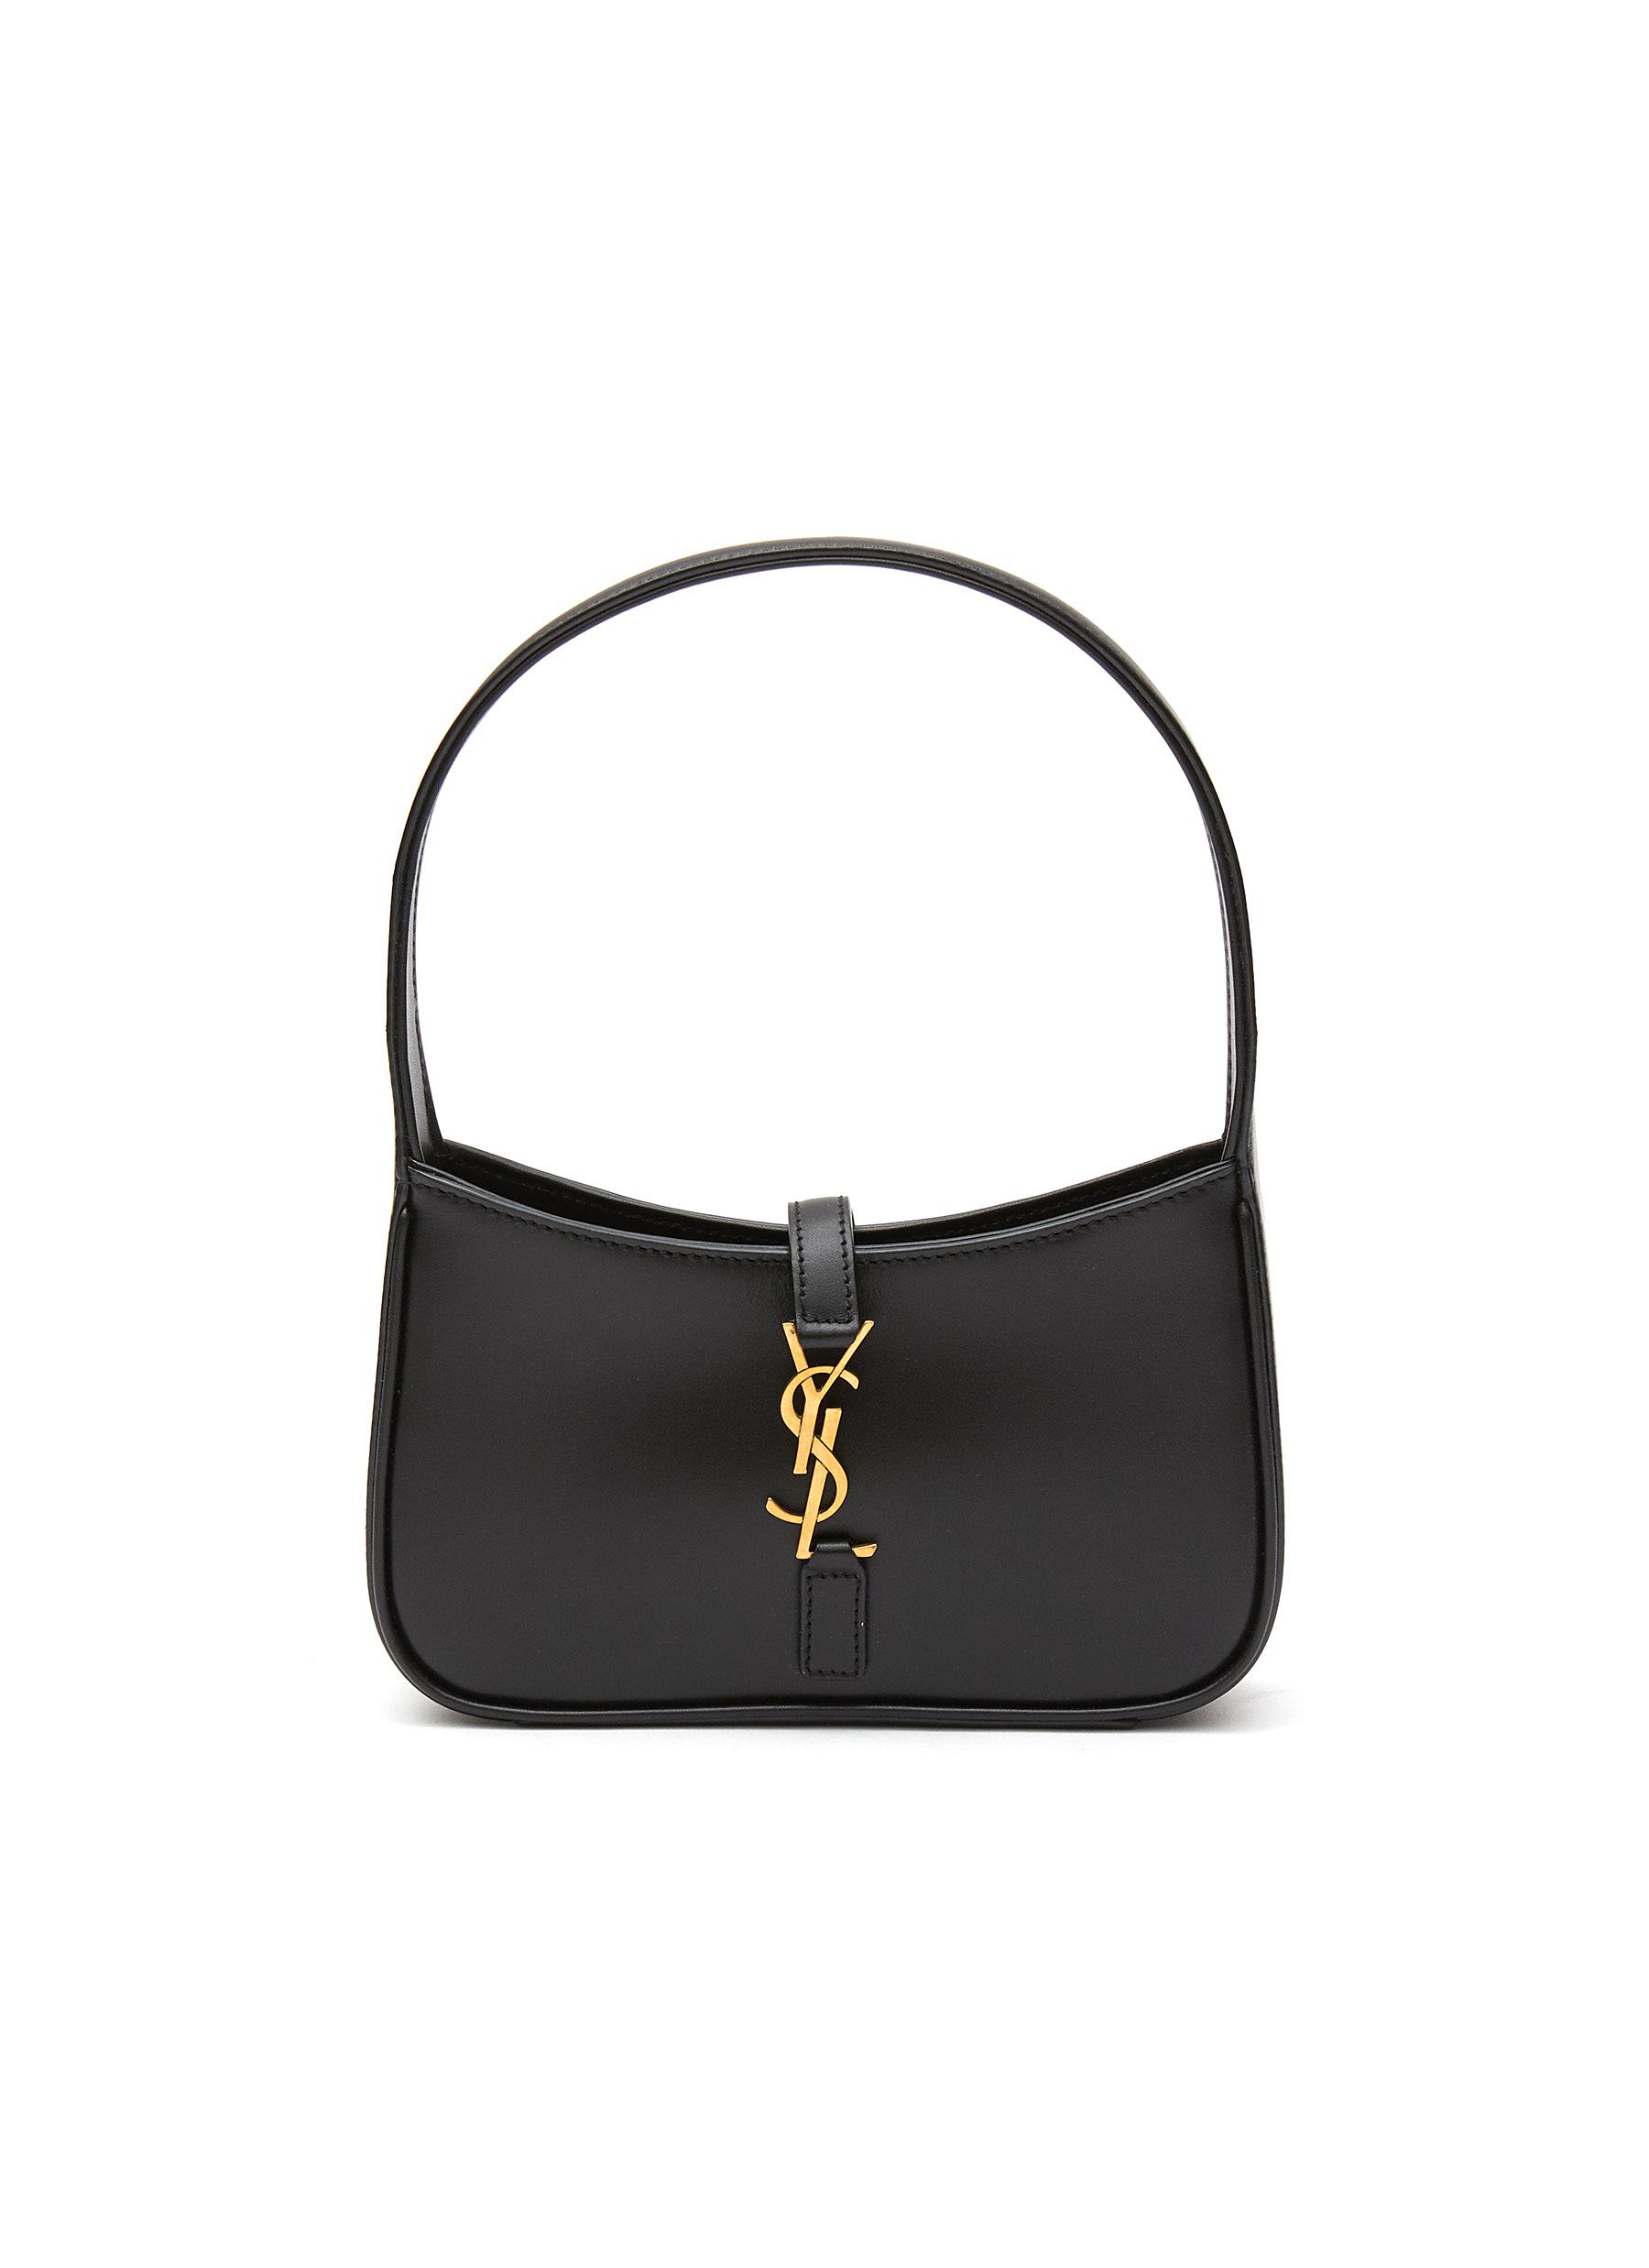 Saint Laurent Bags for Women - YSL Bags